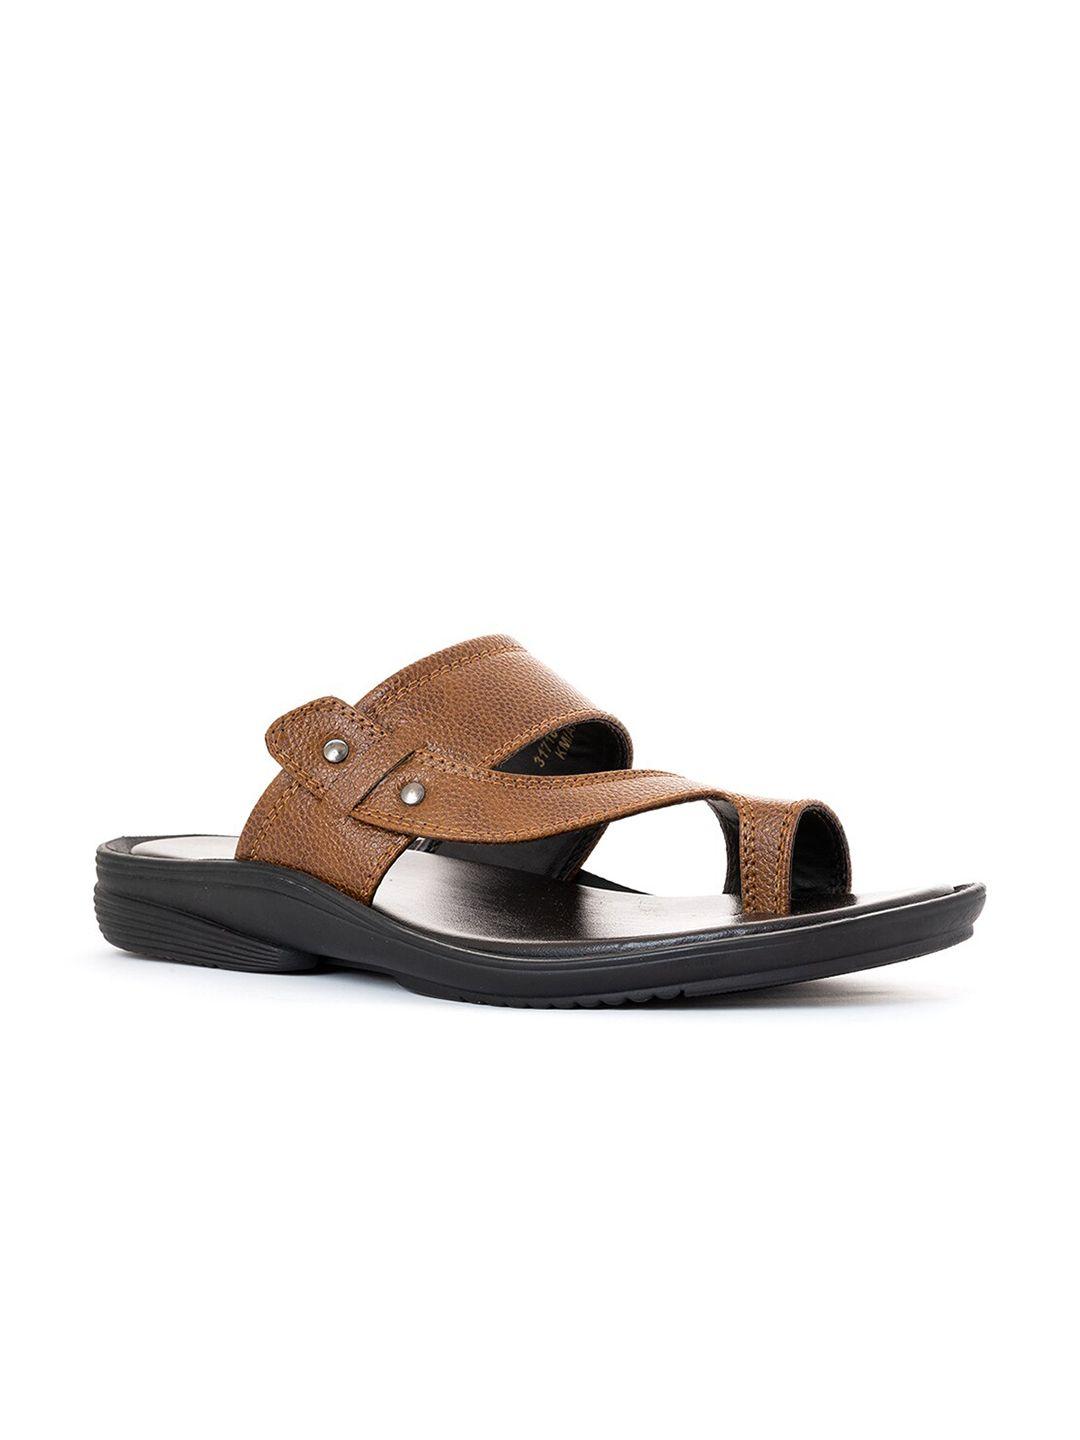 khadims-men-tan-&-black-comfort-sandals